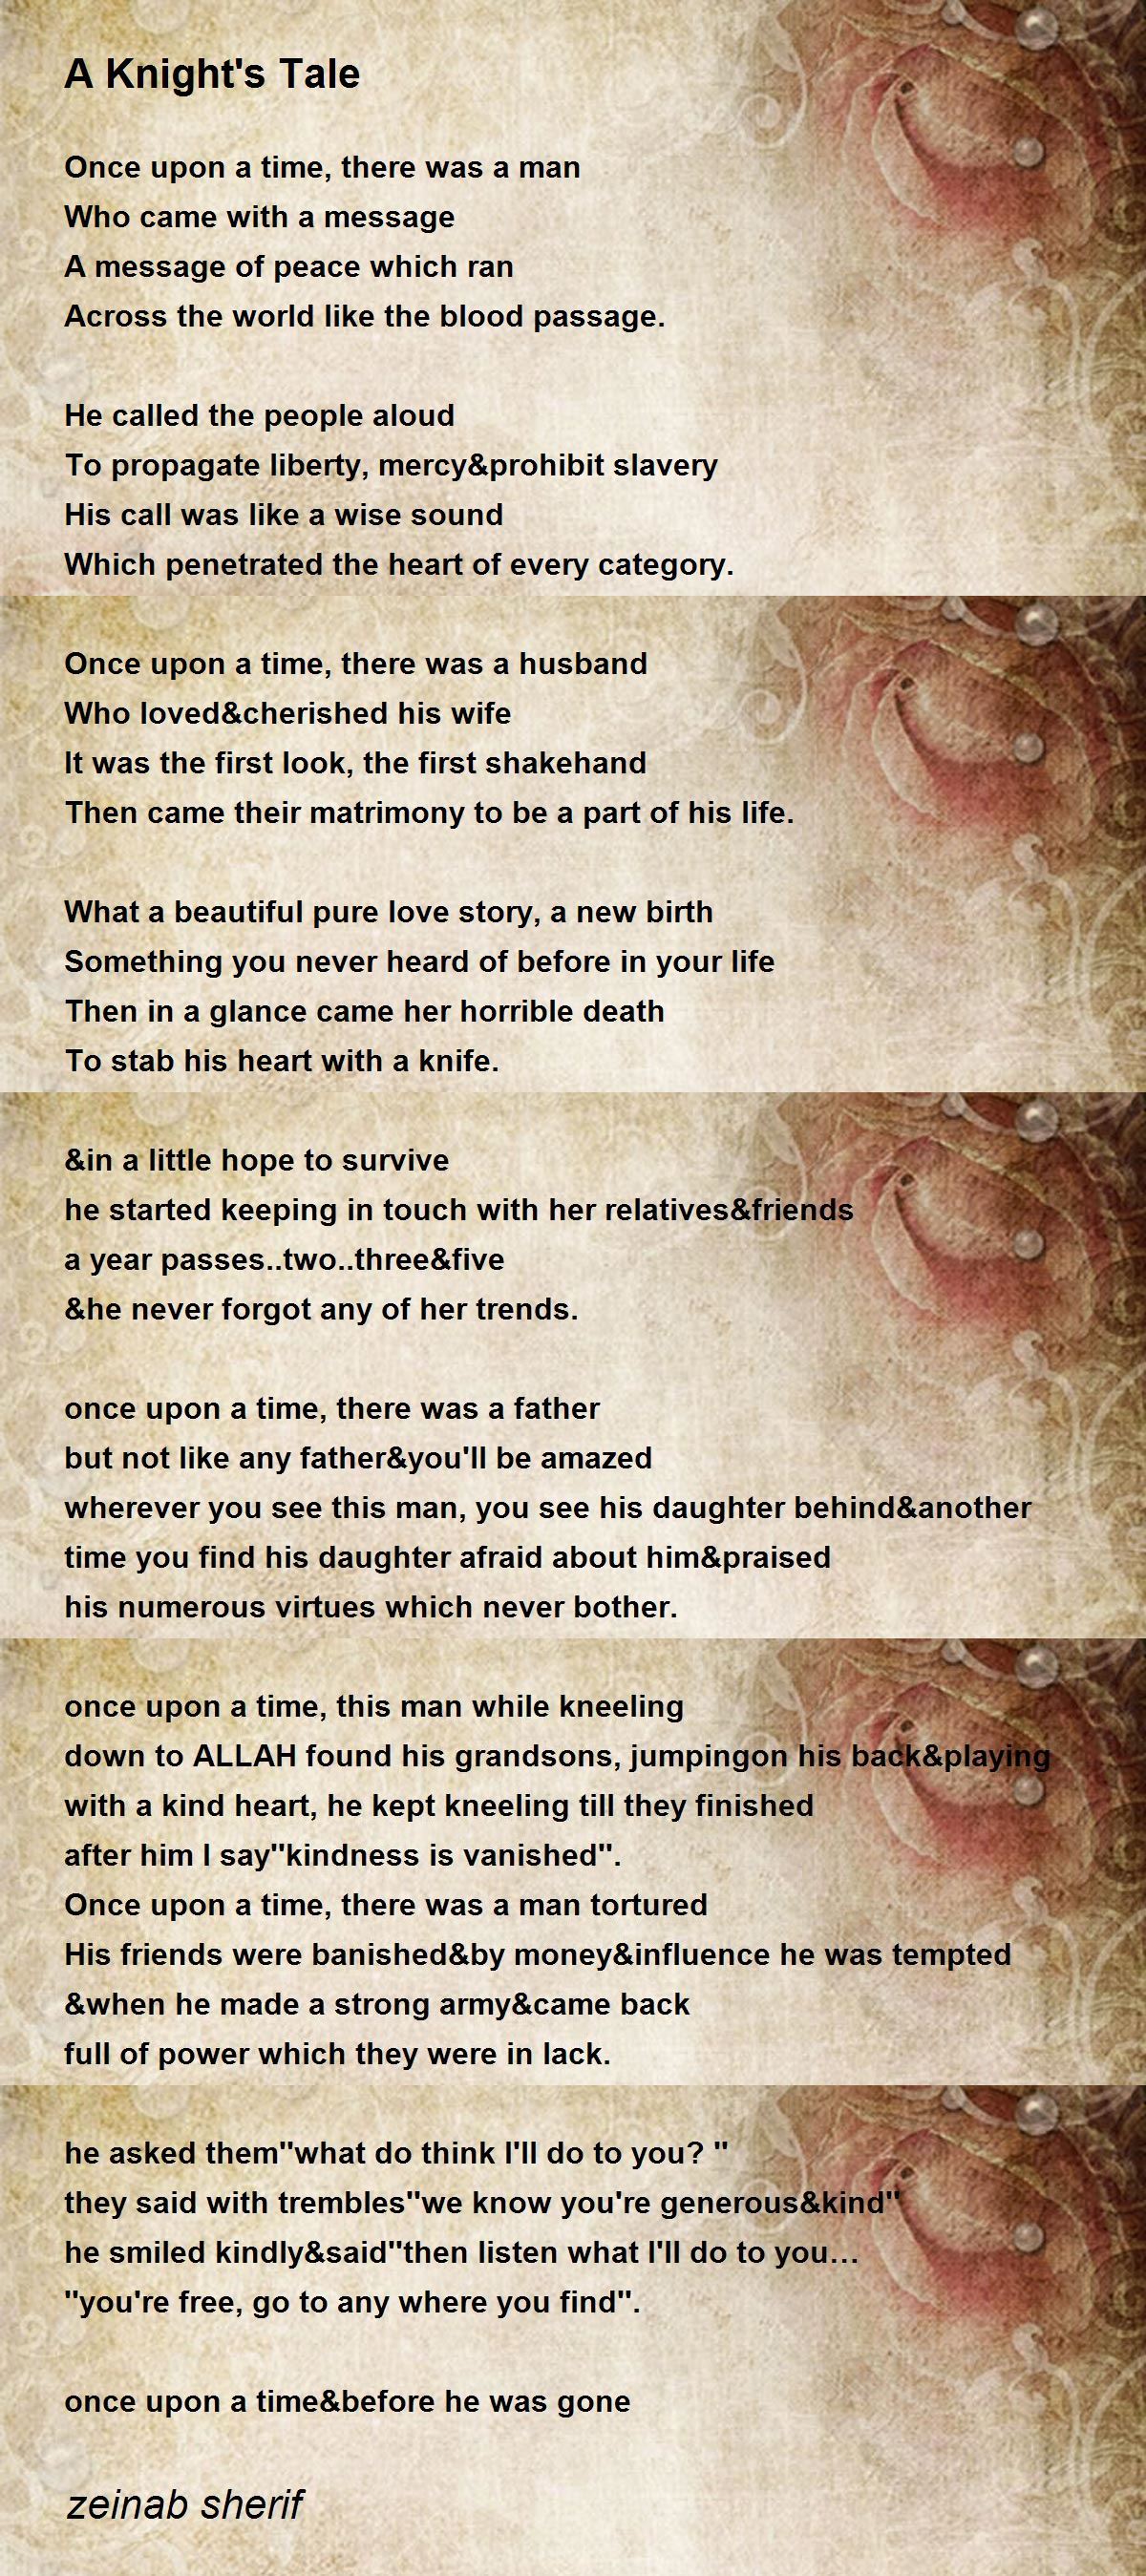 A Knight's Tale by zeinab sherif - A Knight's Tale Poem